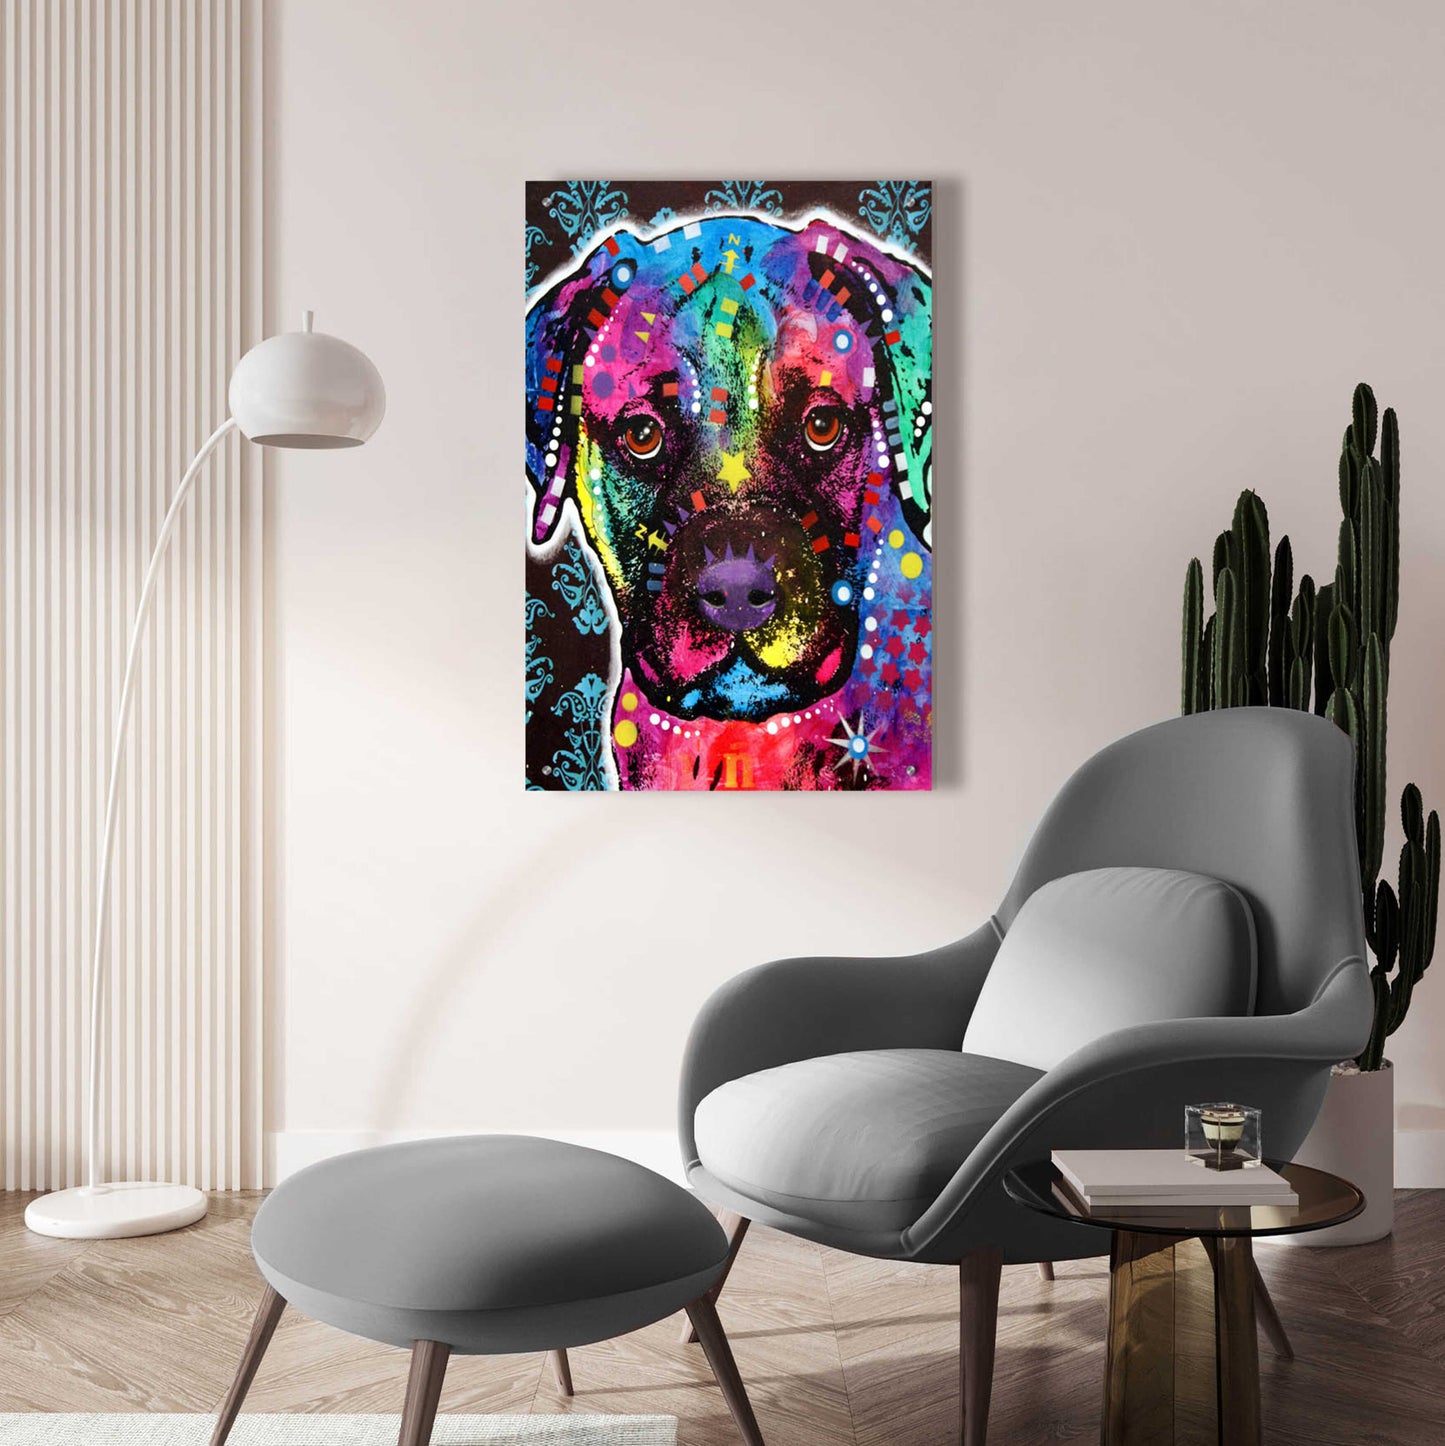 Epic Art 'Young Bullmastiff' by Dean Russo, Acrylic Glass Wall Art,24x36